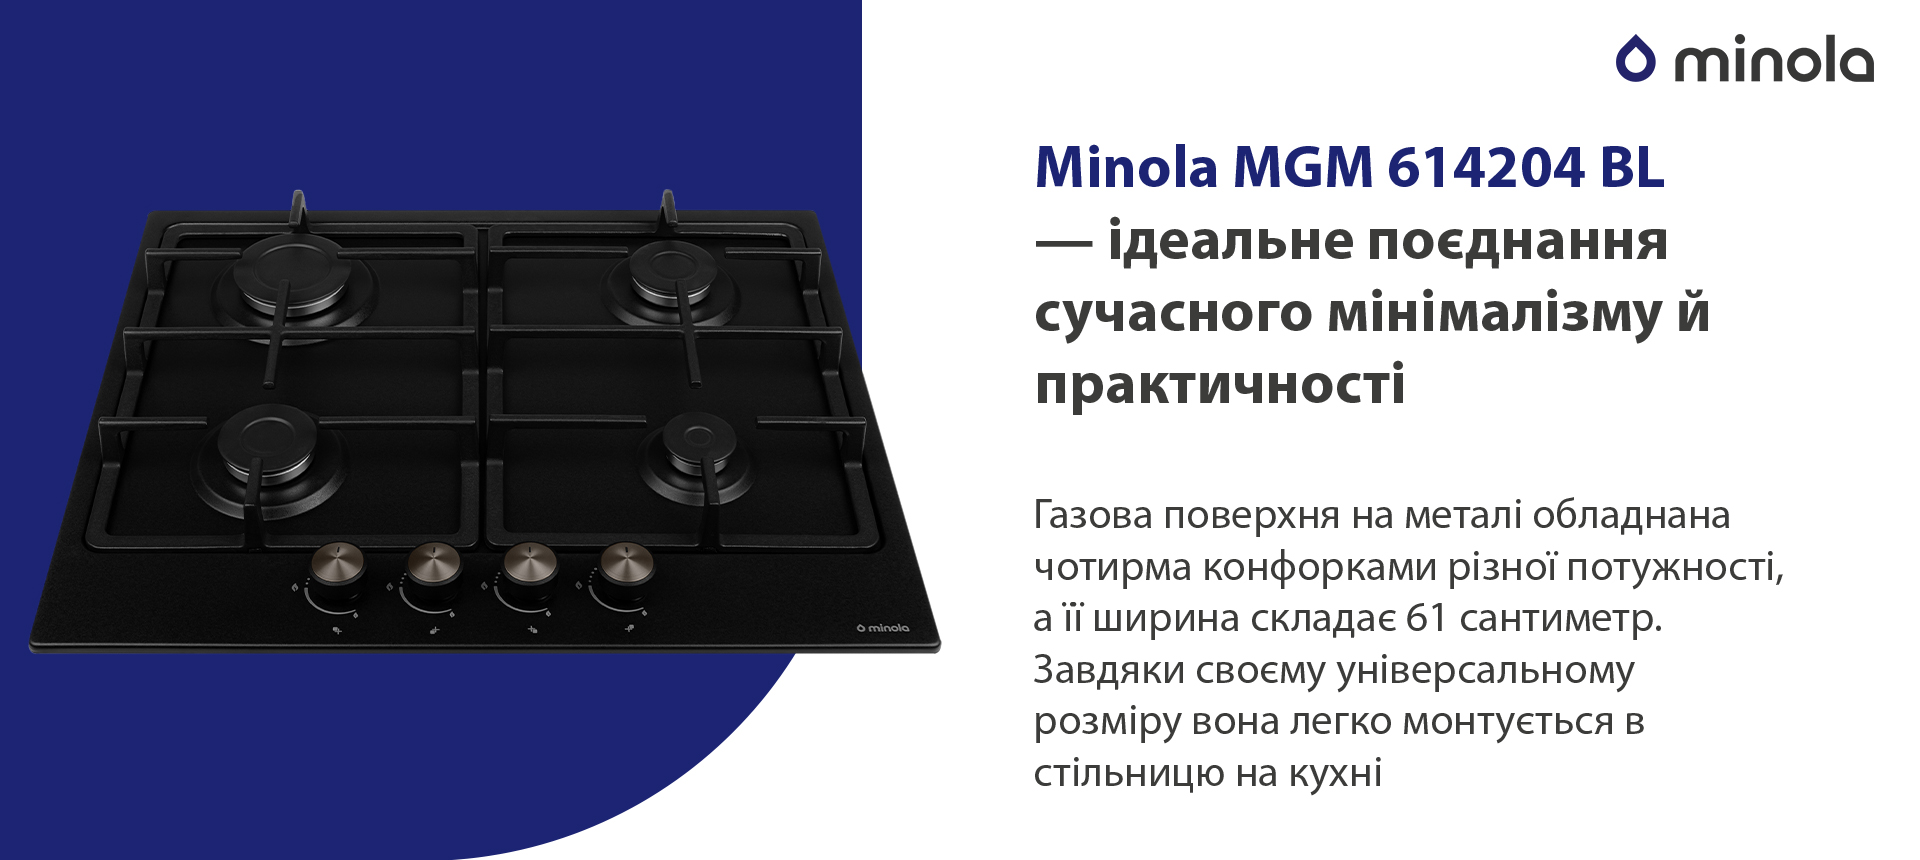 Minola MGM 614204 BL в магазині в Києві - фото 10